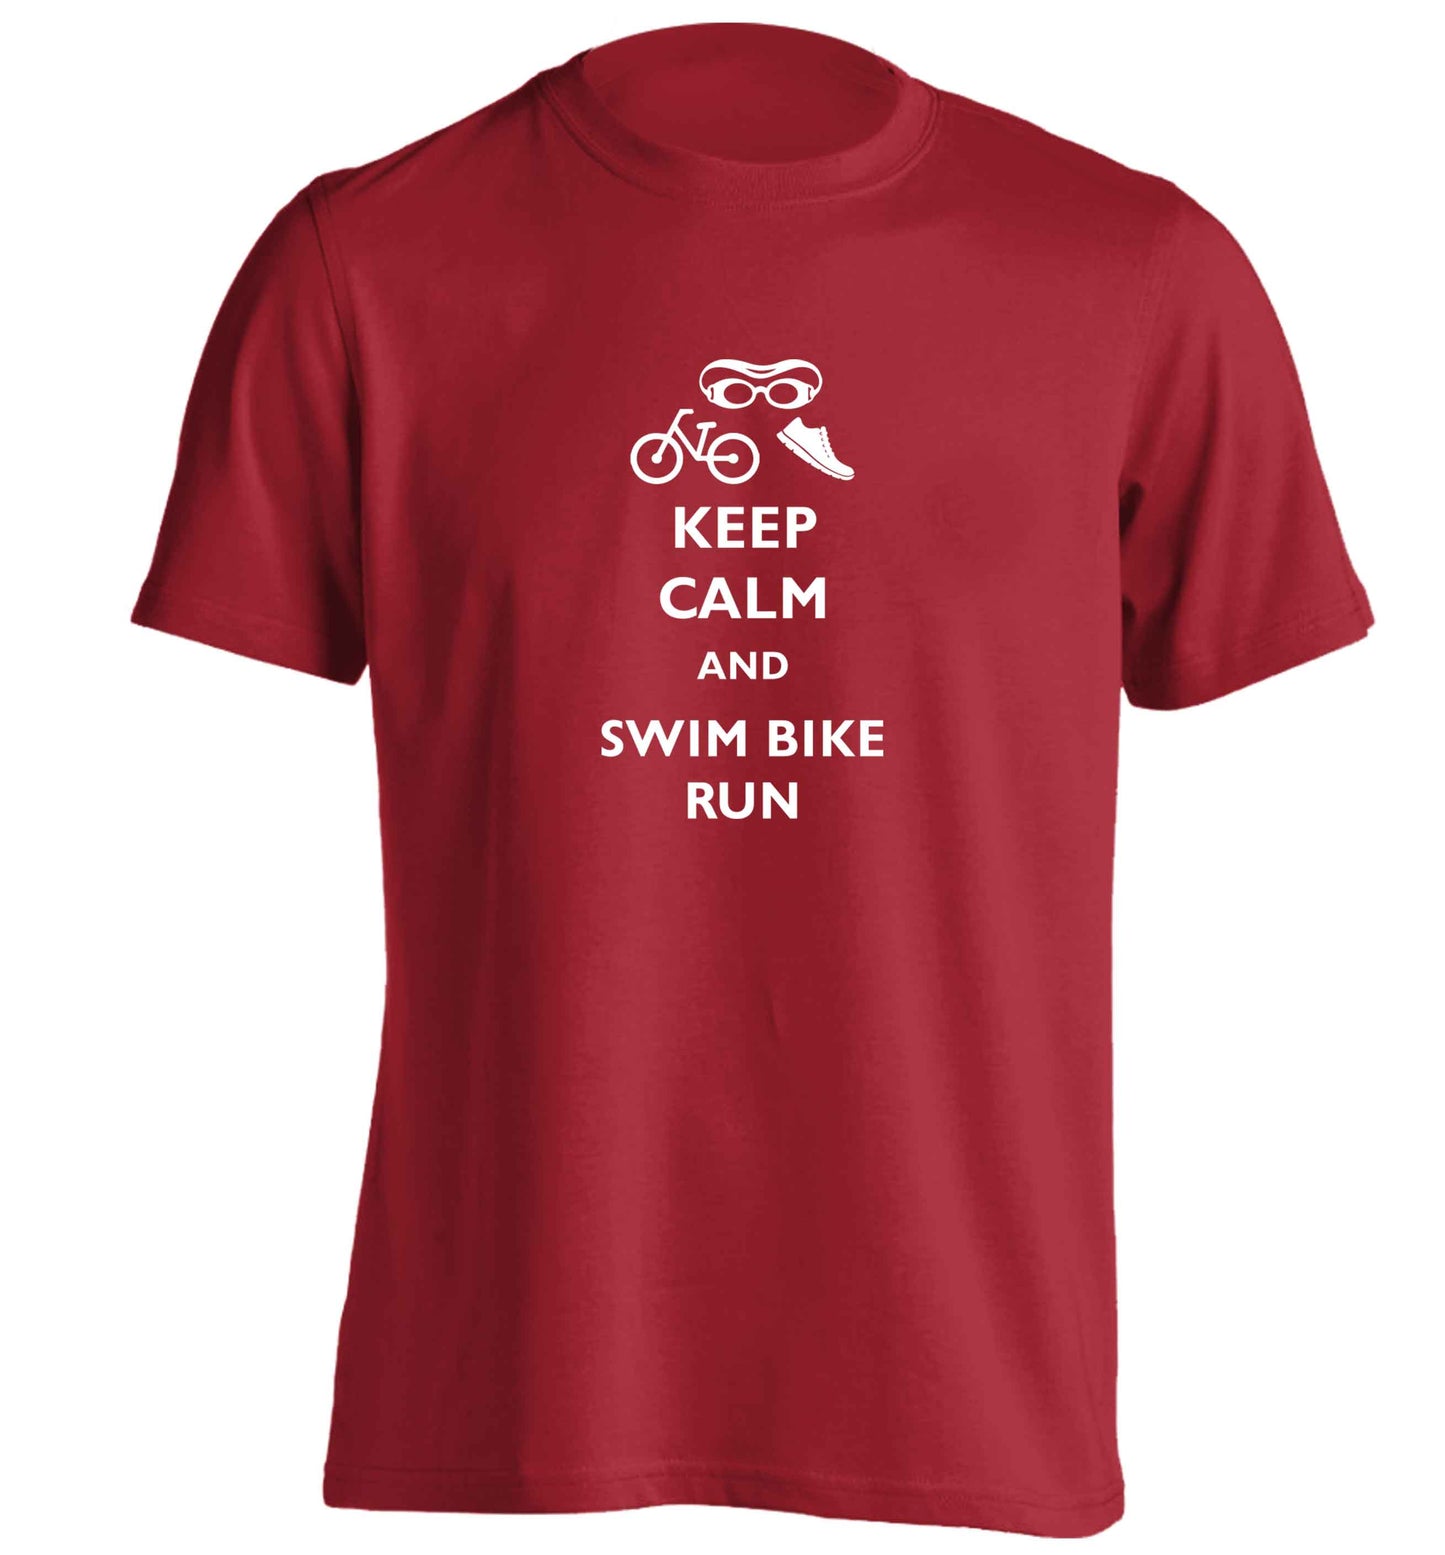 Keep calm and swim bike run adults unisex red Tshirt 2XL